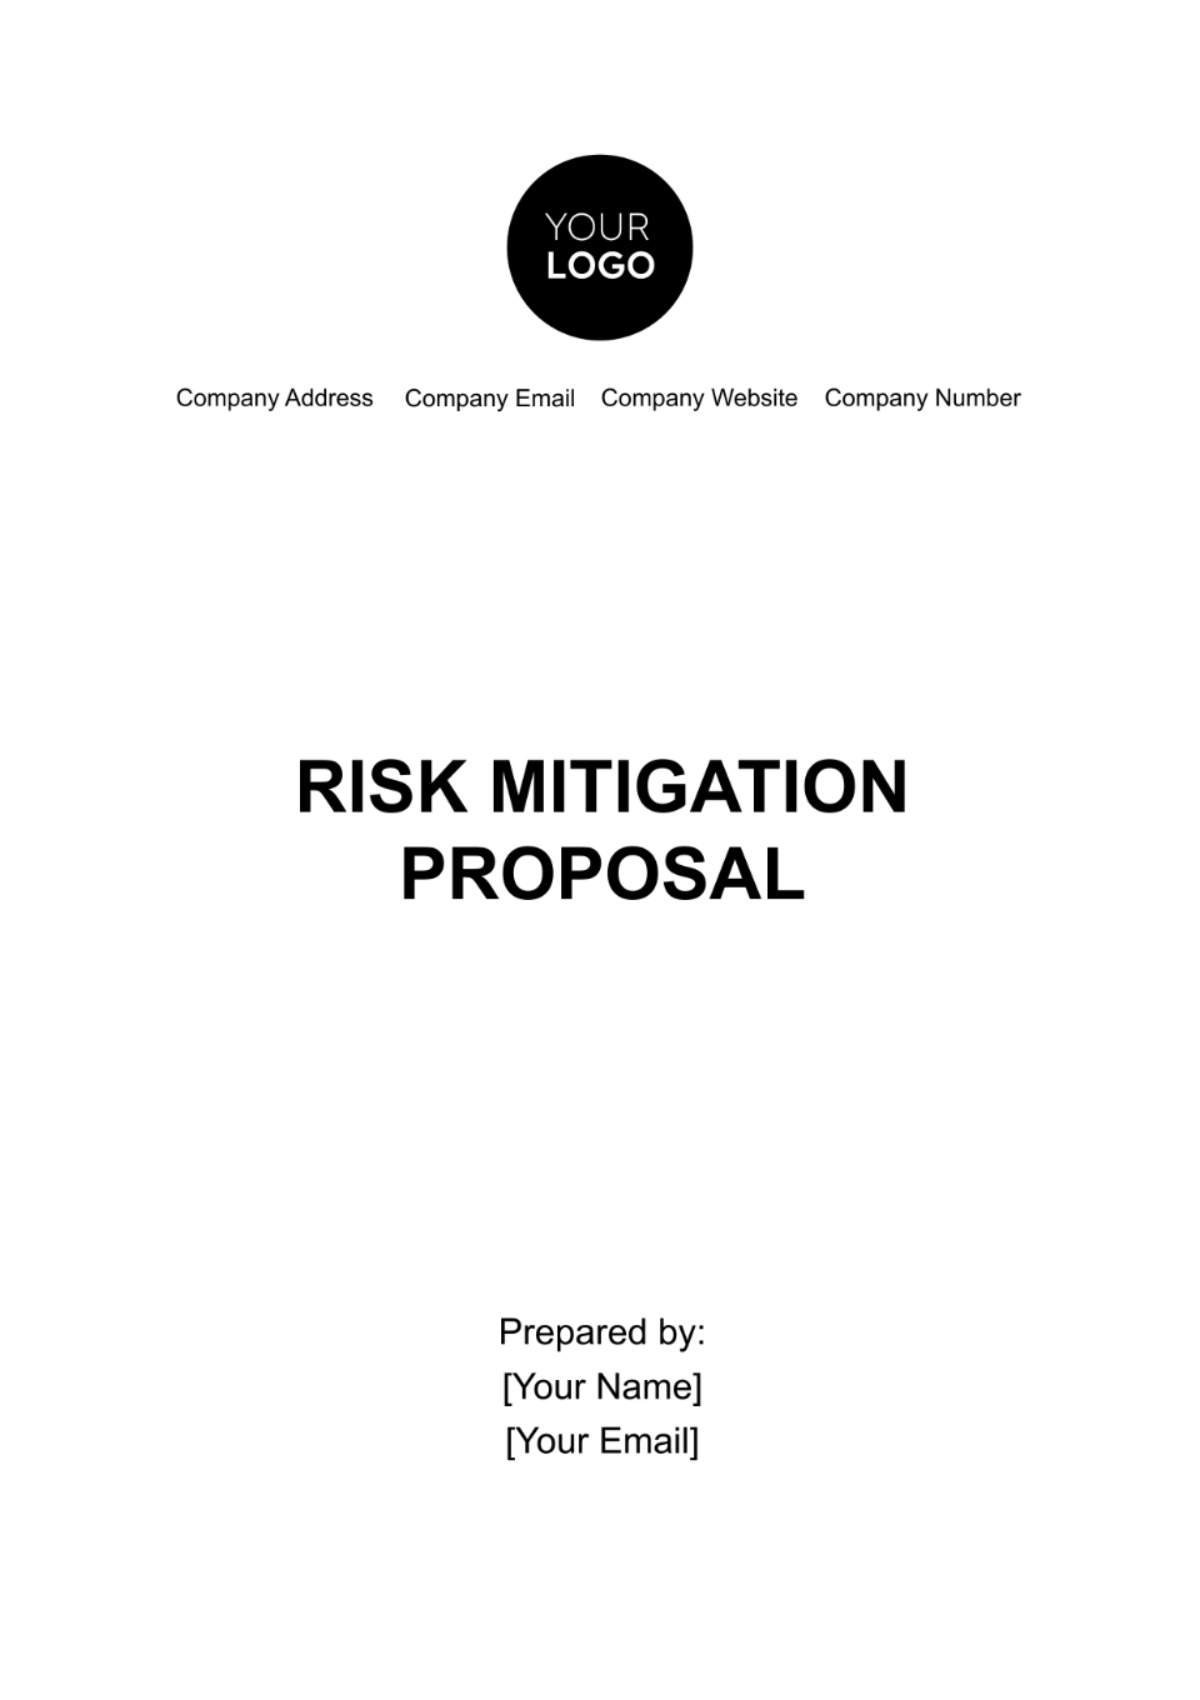 Risk Mitigation Proposal Template